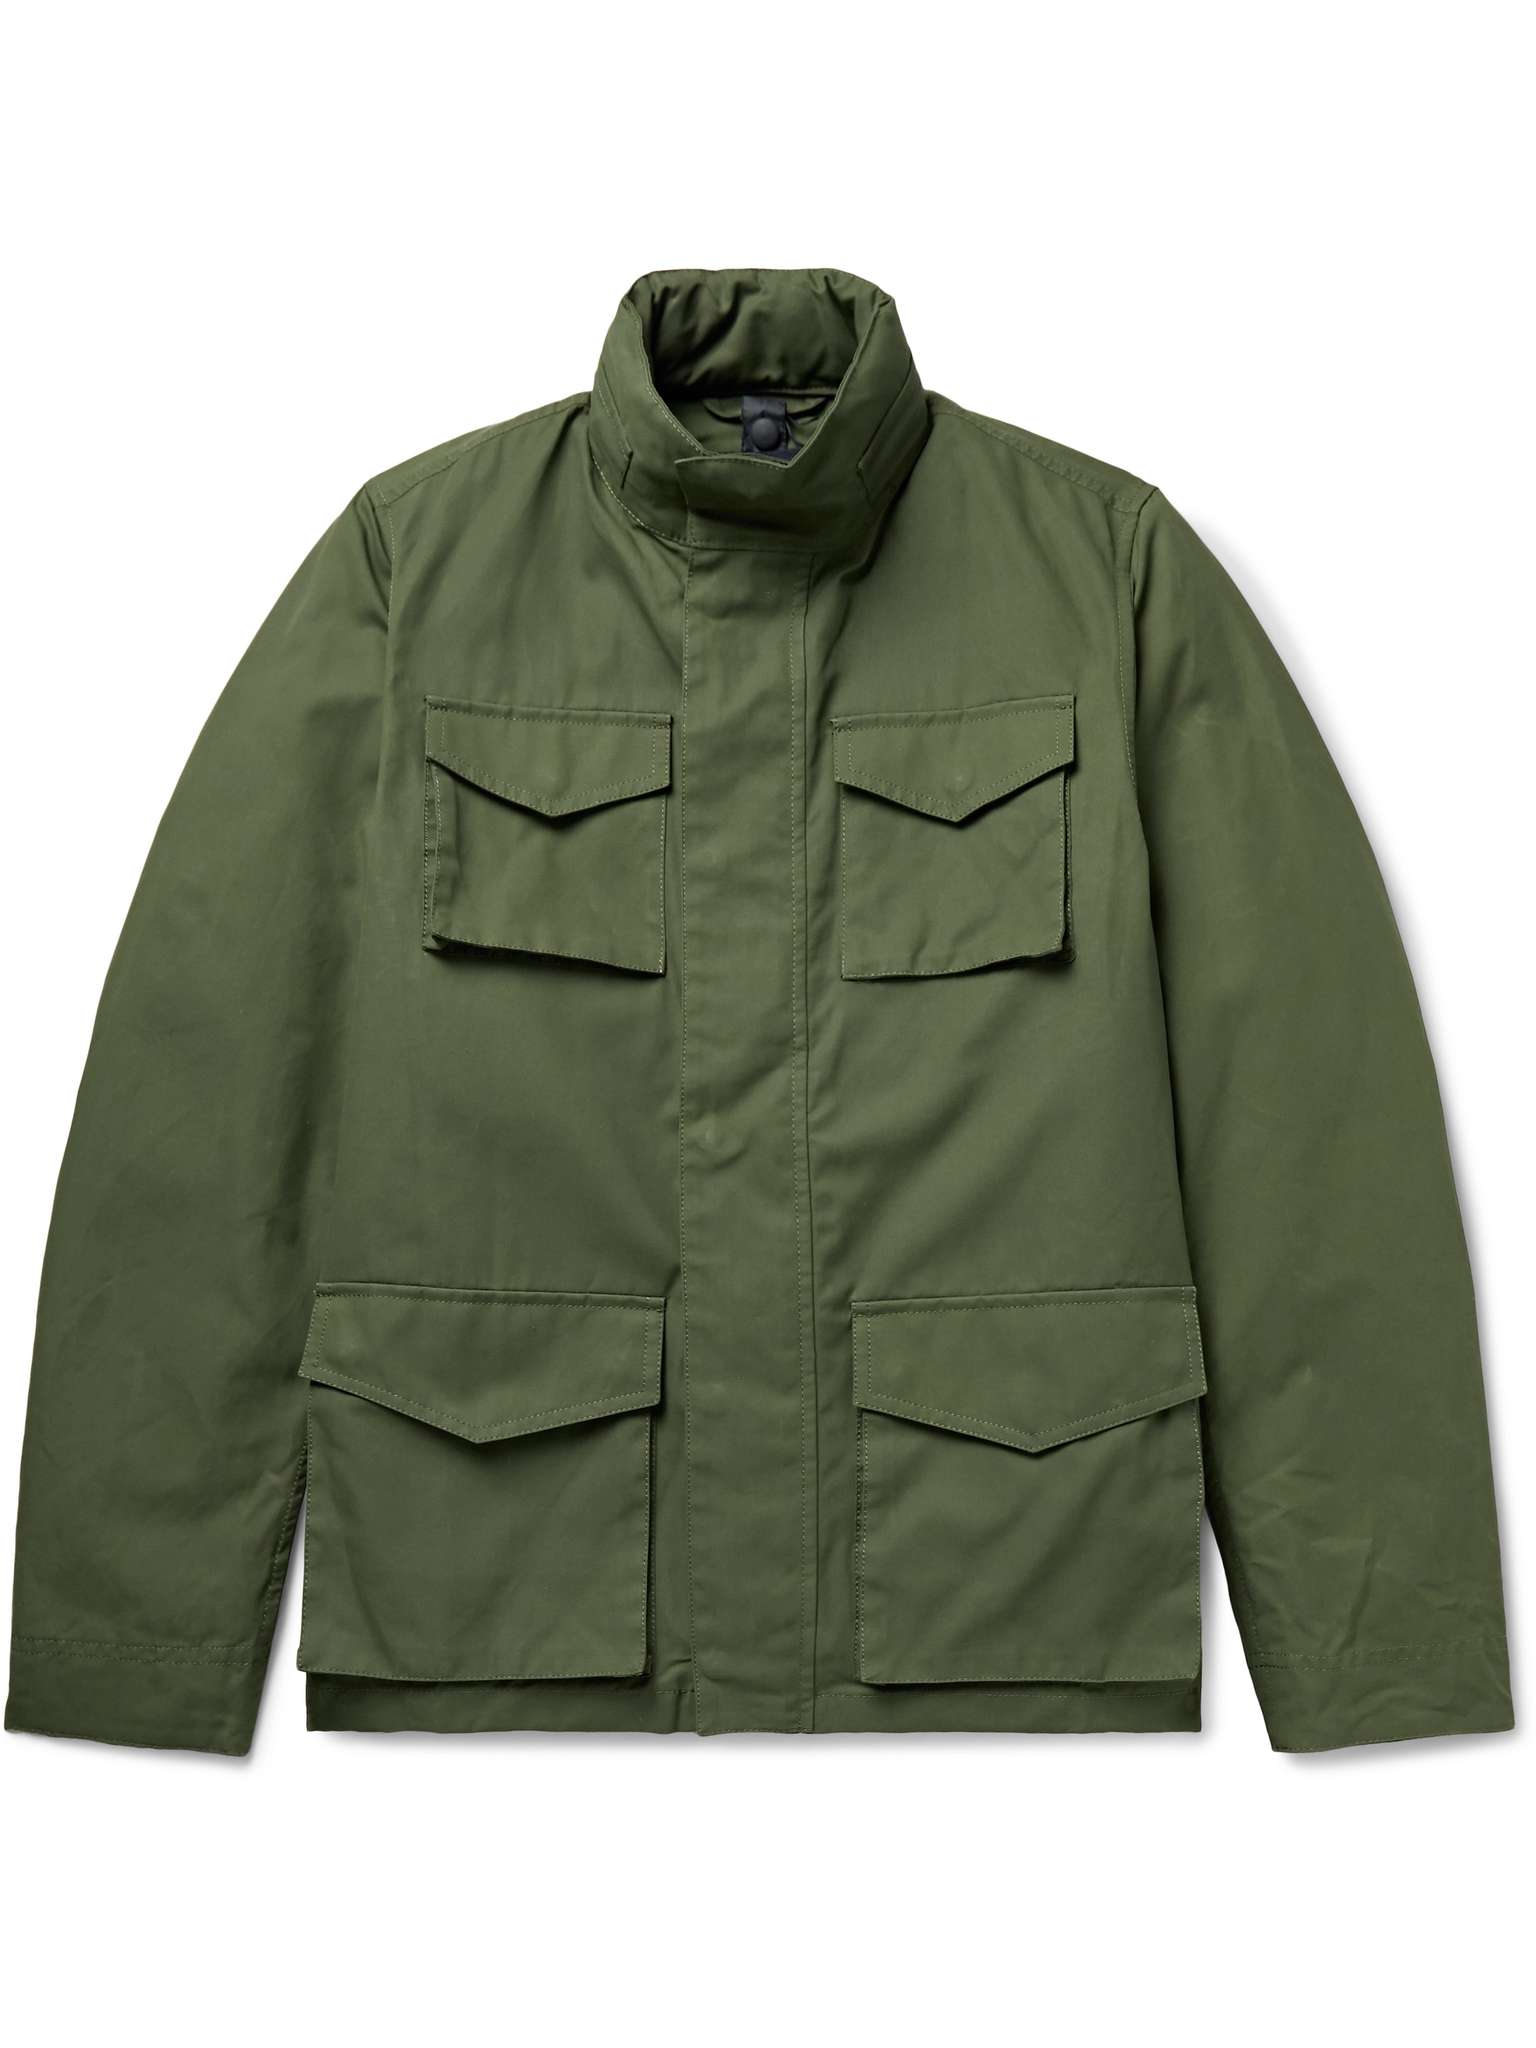 Army green Cotton-Twill Jacket | SID MASHBURN | MR PORTER